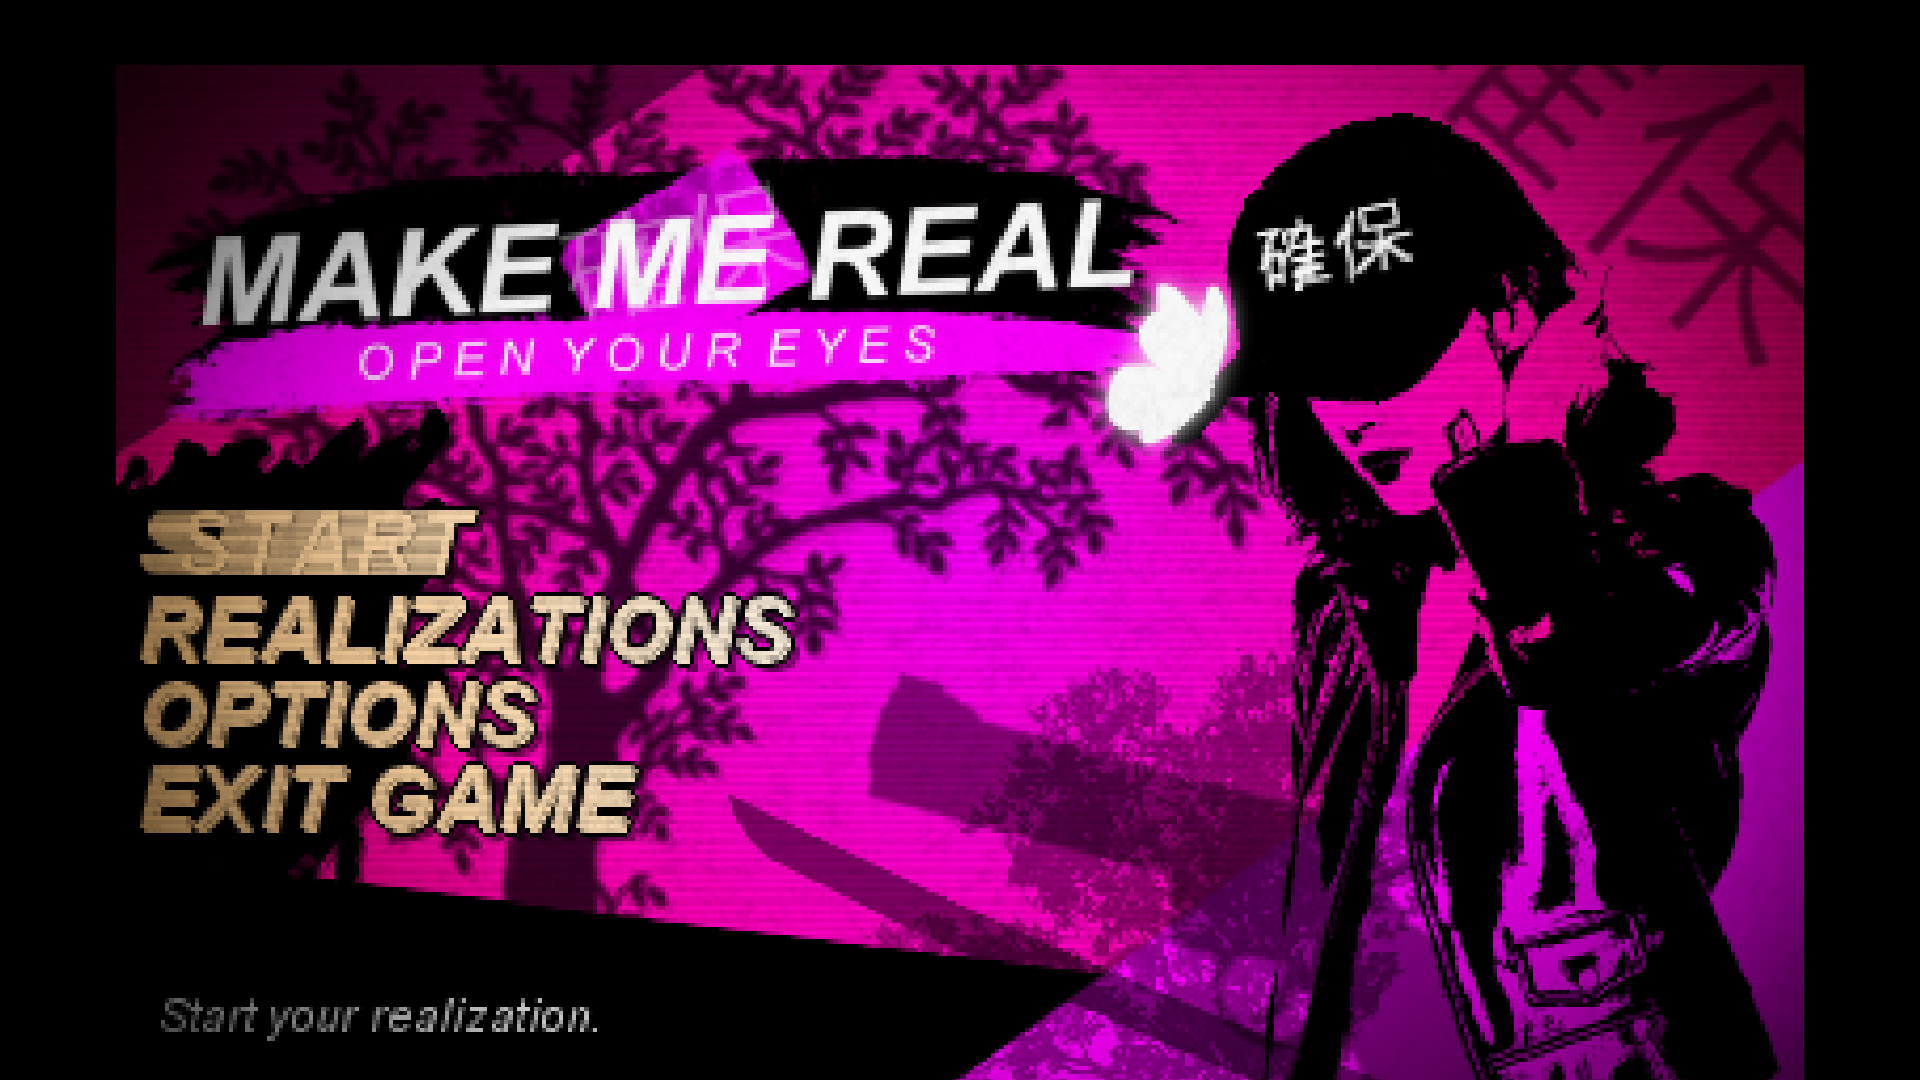 Real me game. Make me real. Make me real open your Eyes. Riaru make me real. Make me real rainpour.